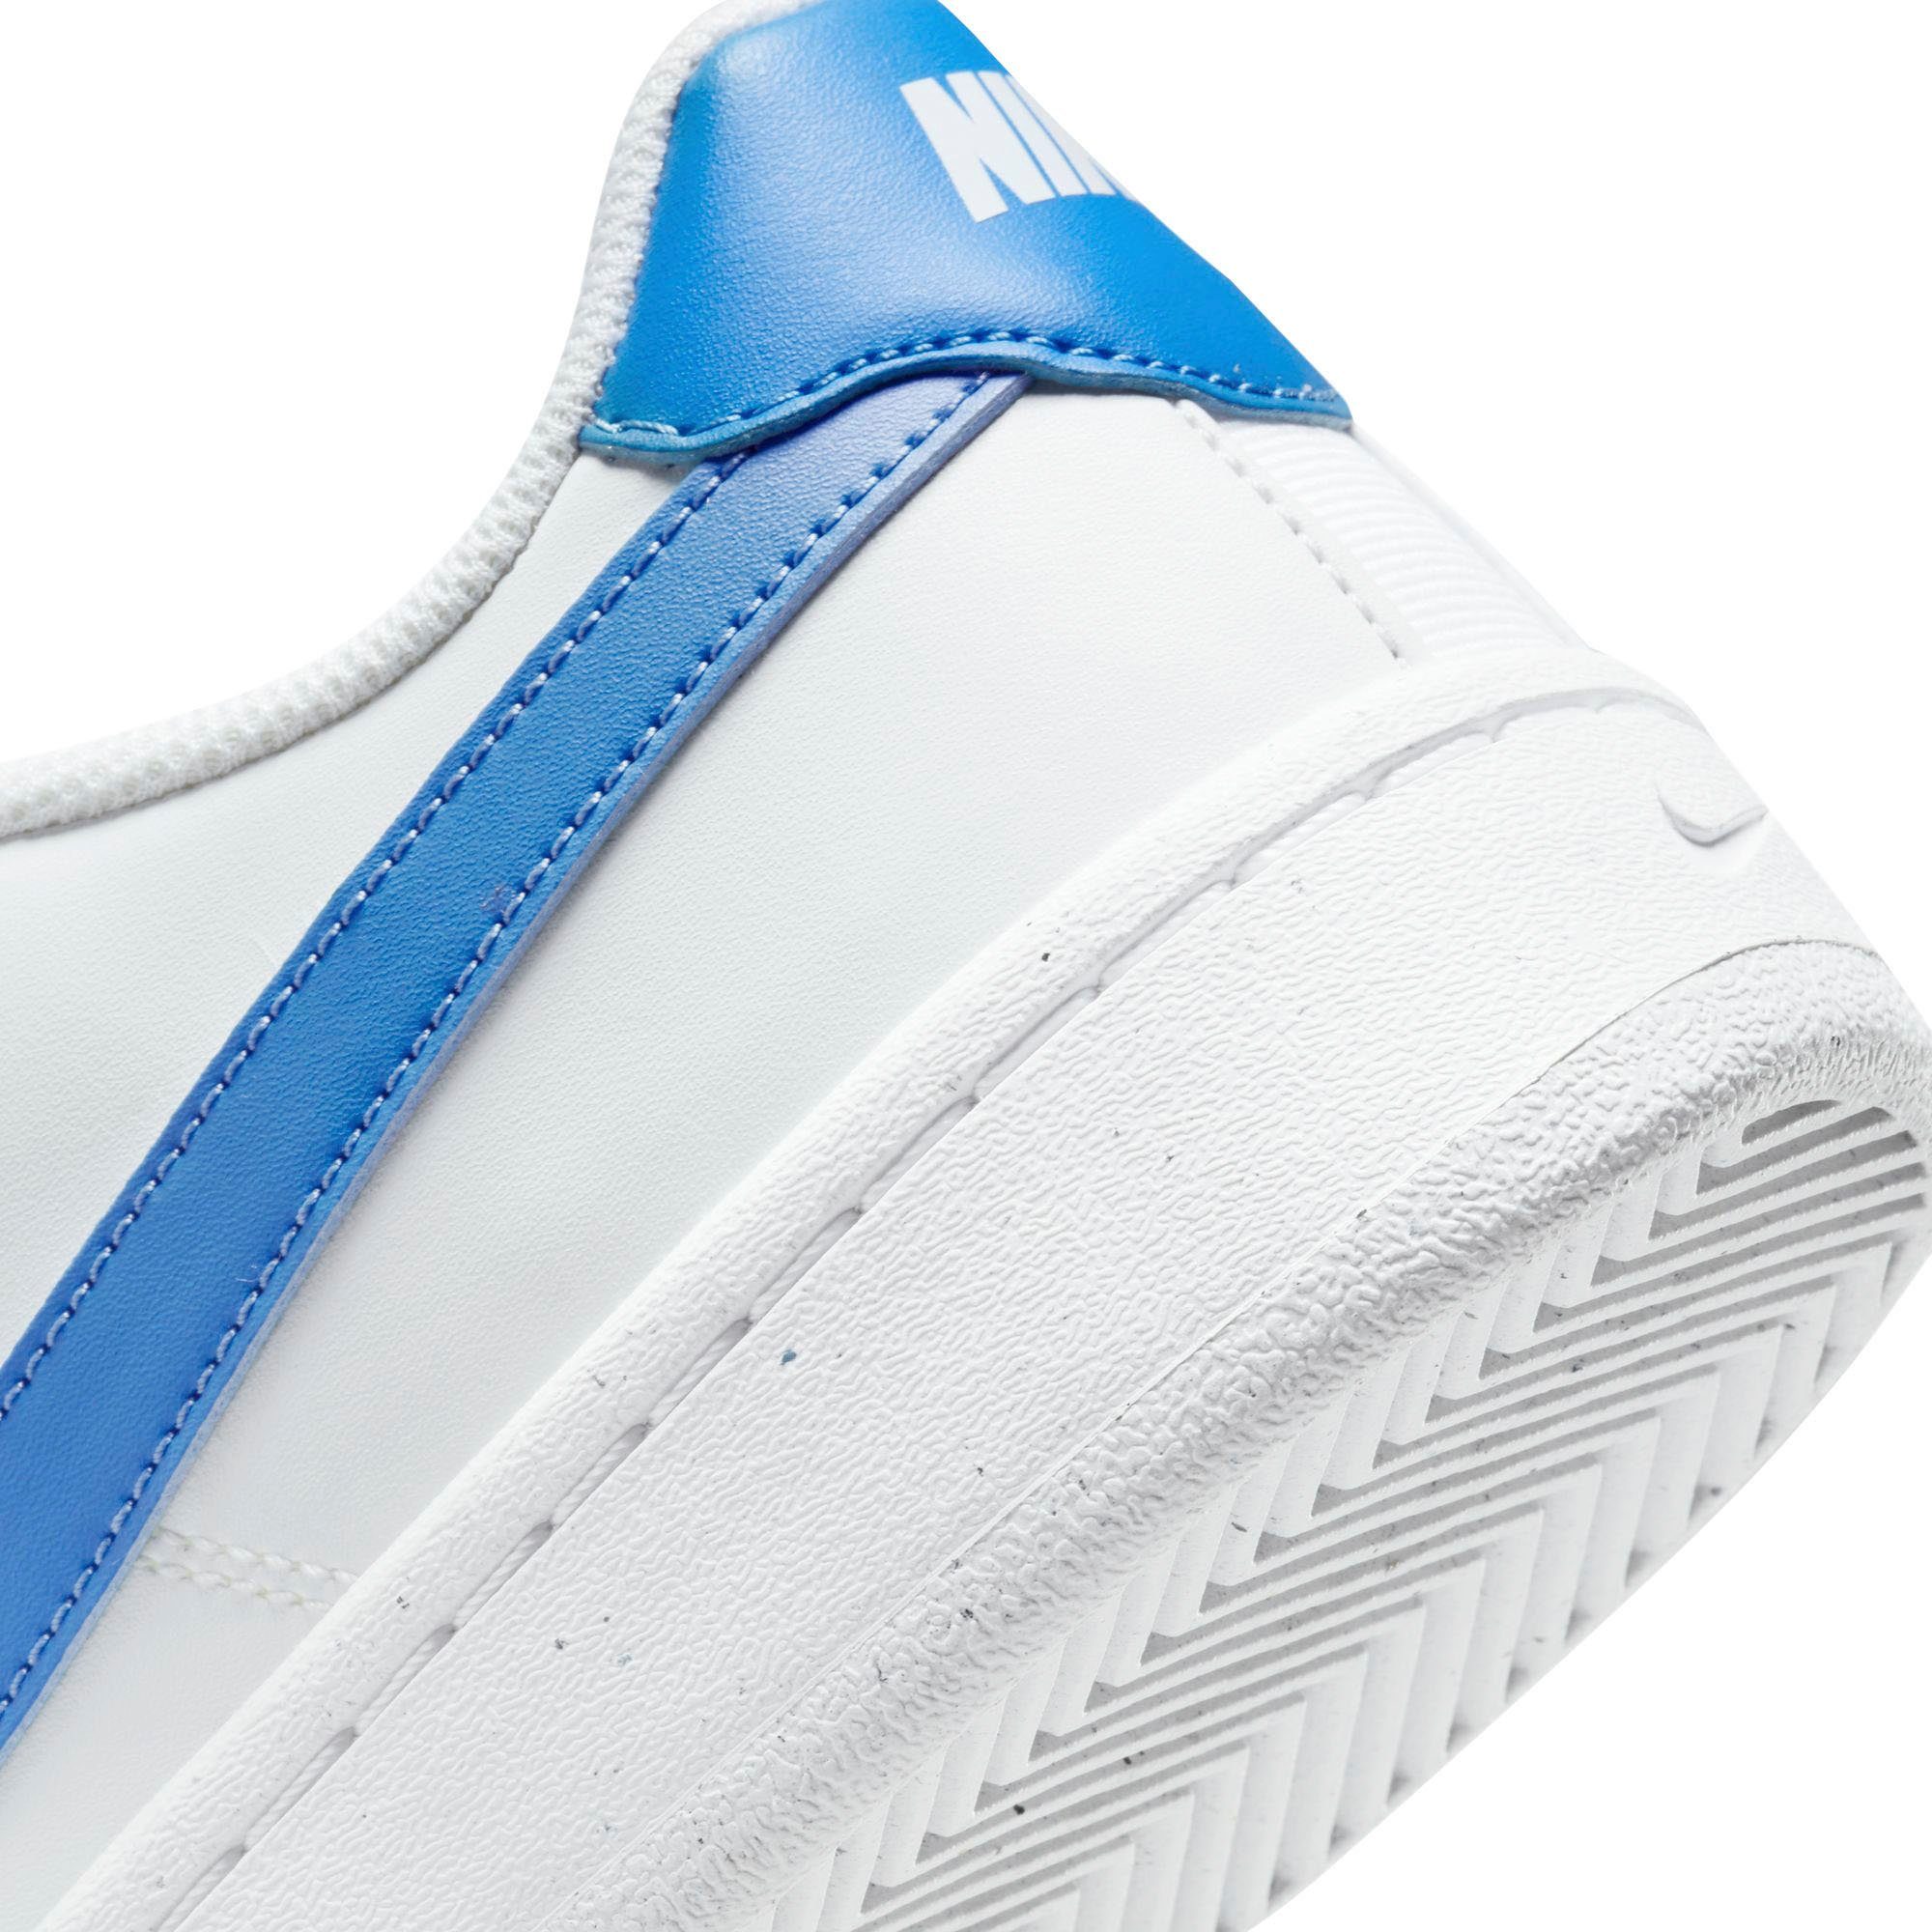 NEXT NATURE Sportswear COURT Sneaker Nike WHITE-LT-PHOTO-BLUE 2 ROYALE